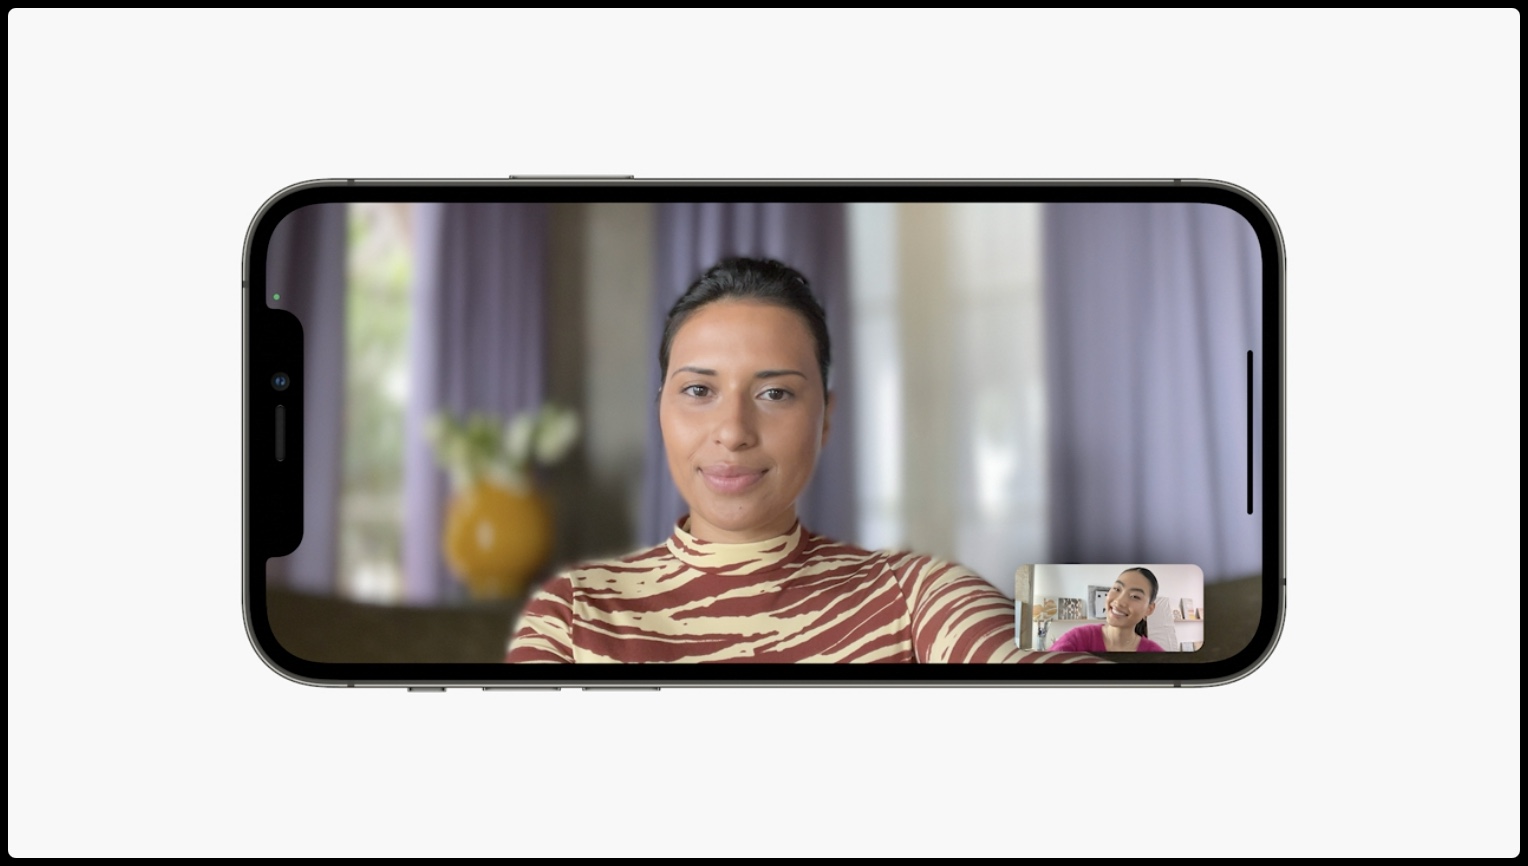 Apple's WWDC21 slide showing FaceTime Portrait video on iPhone